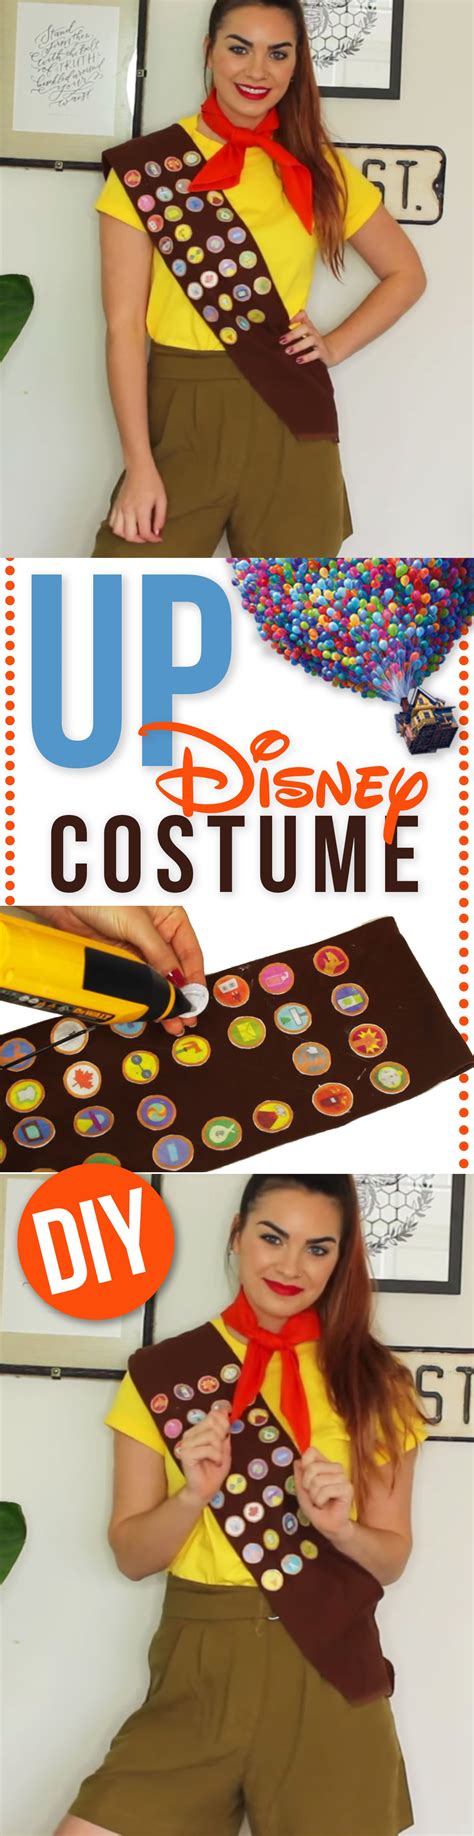 Snake plissken costume diy dress up guides for cosplay diy russell wilderness explorer halloween costume Russell from Disney's UP Costume. UP Halloween Halloween ...